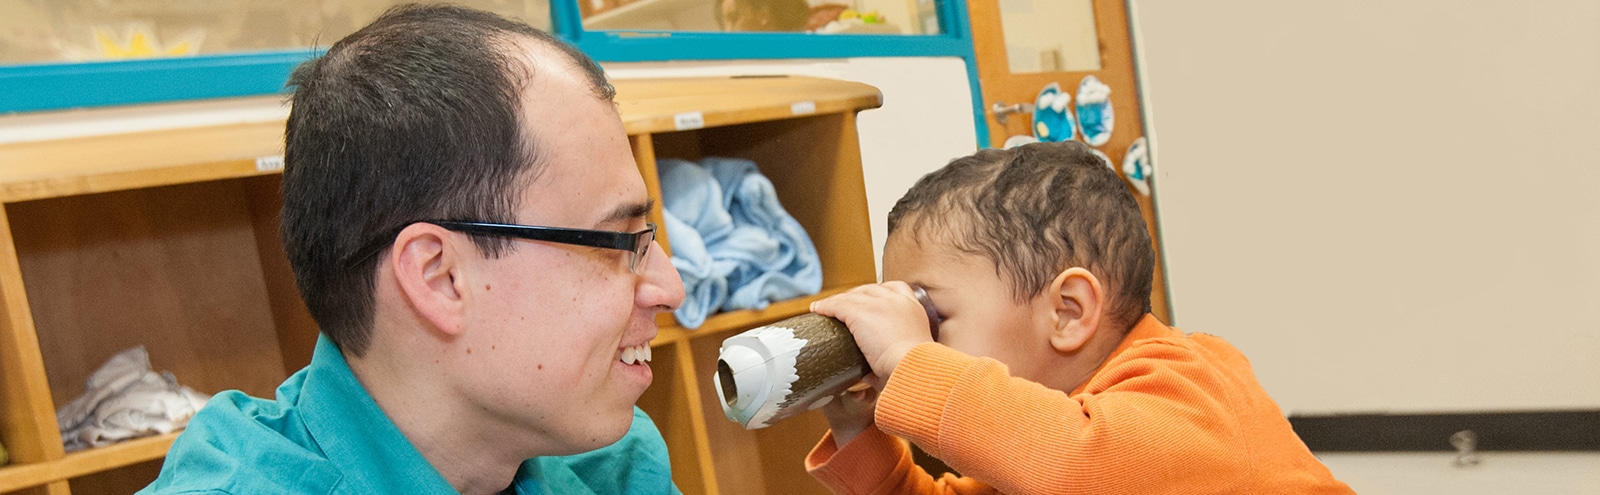 Un niño mira a un educador de primera infancia a través de binoculares de juguete.